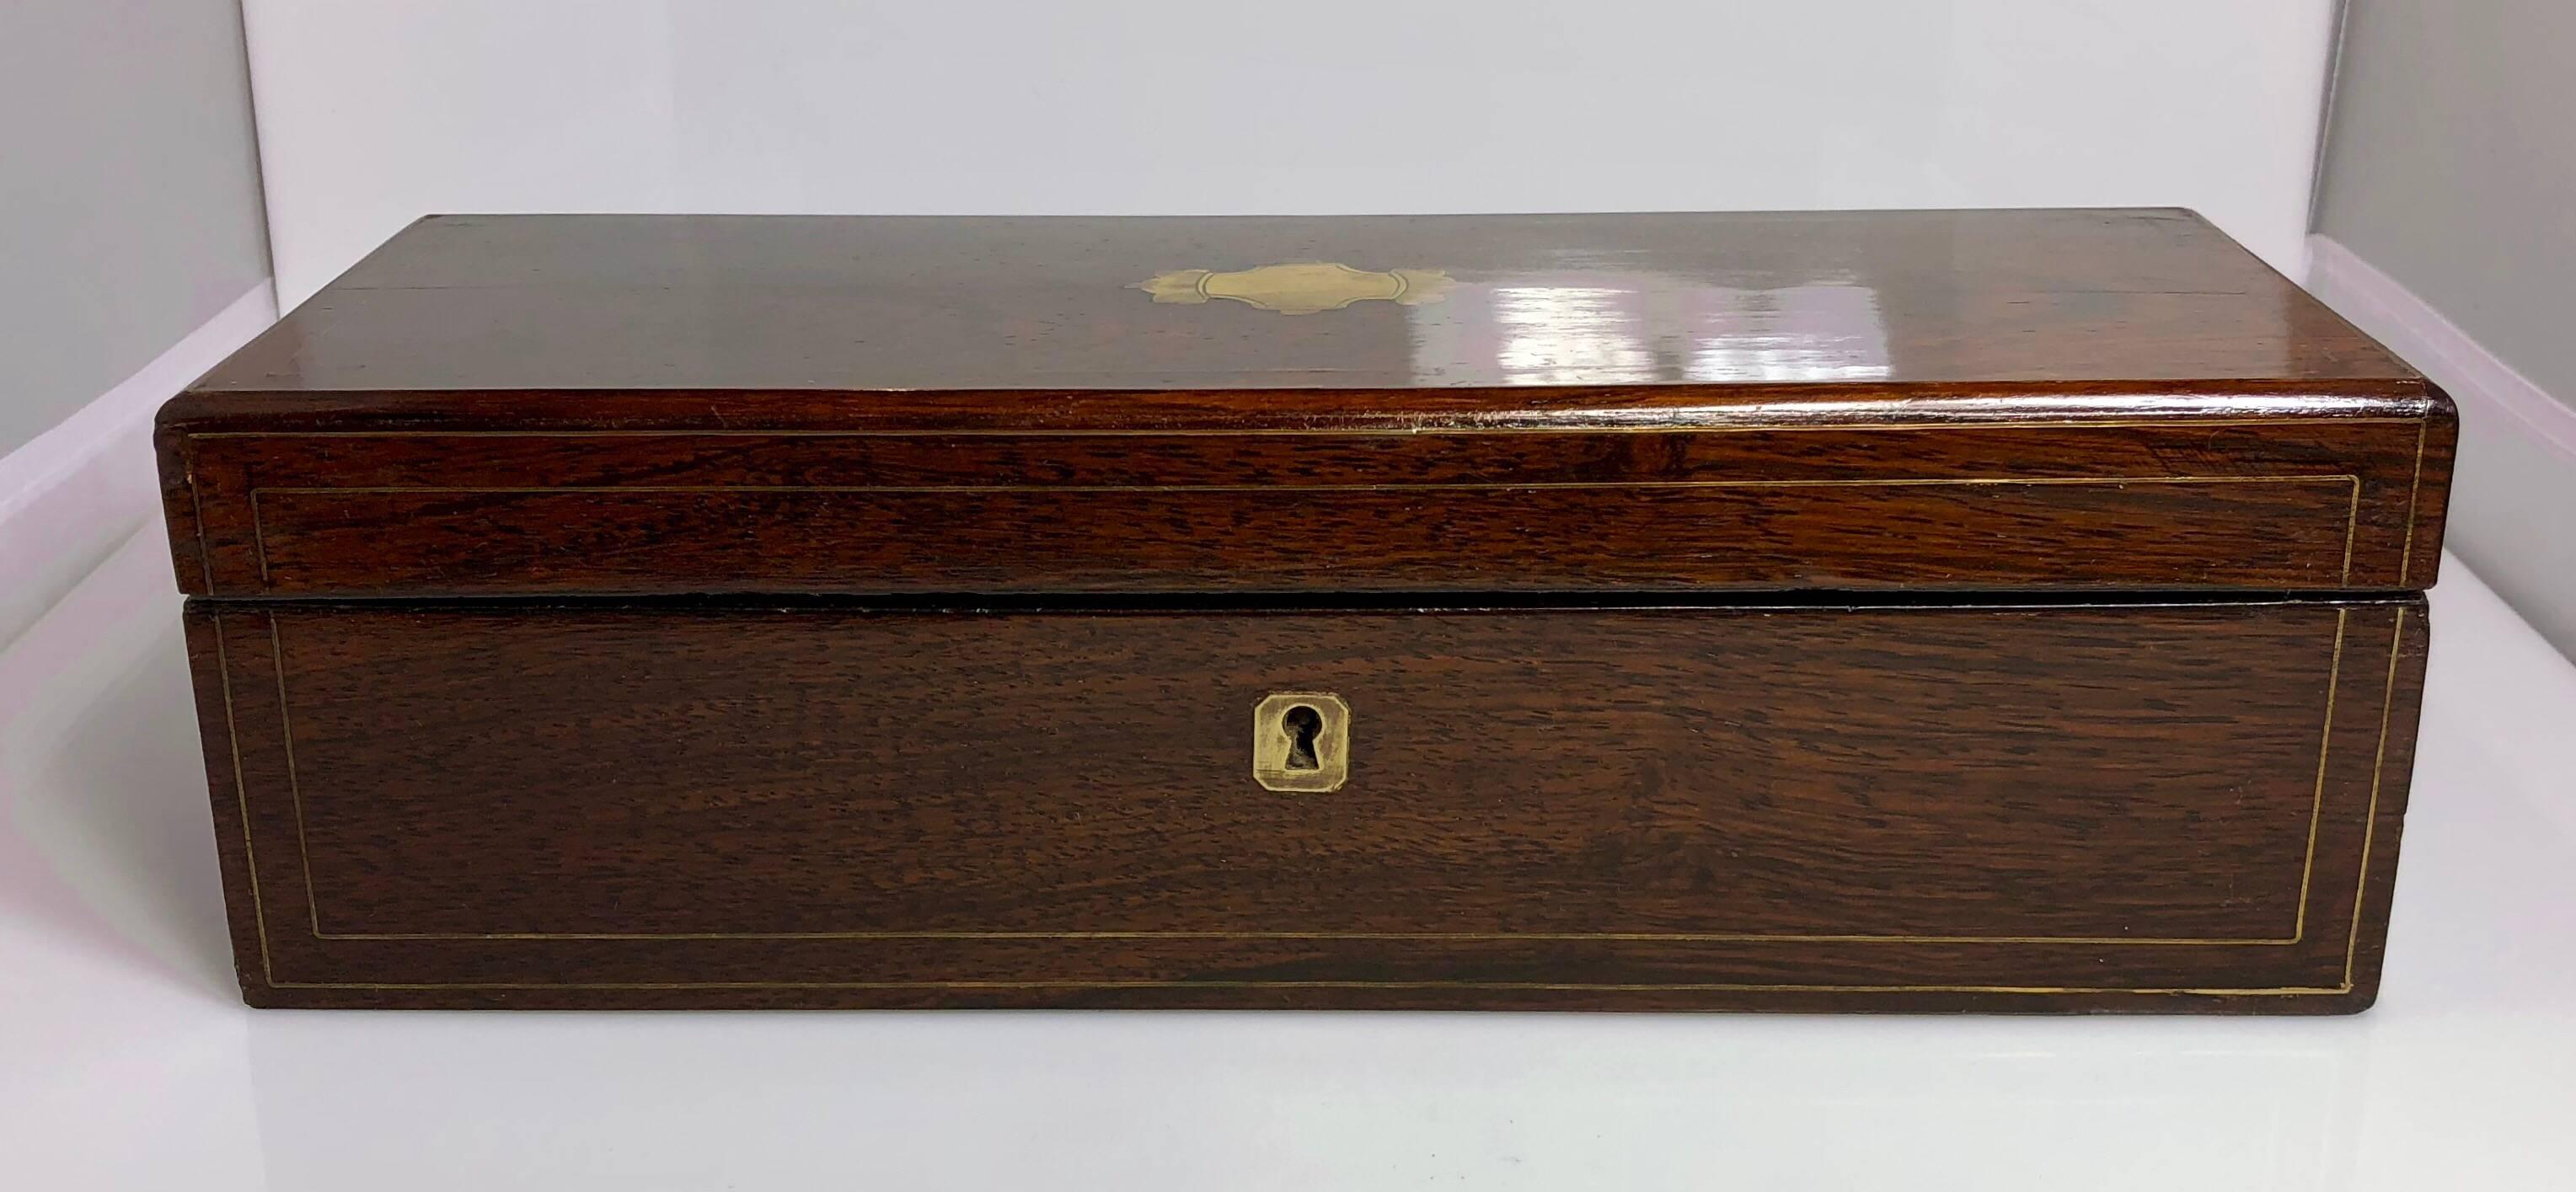 Antique English rosewood glove box with brass inlay, circa 1880.